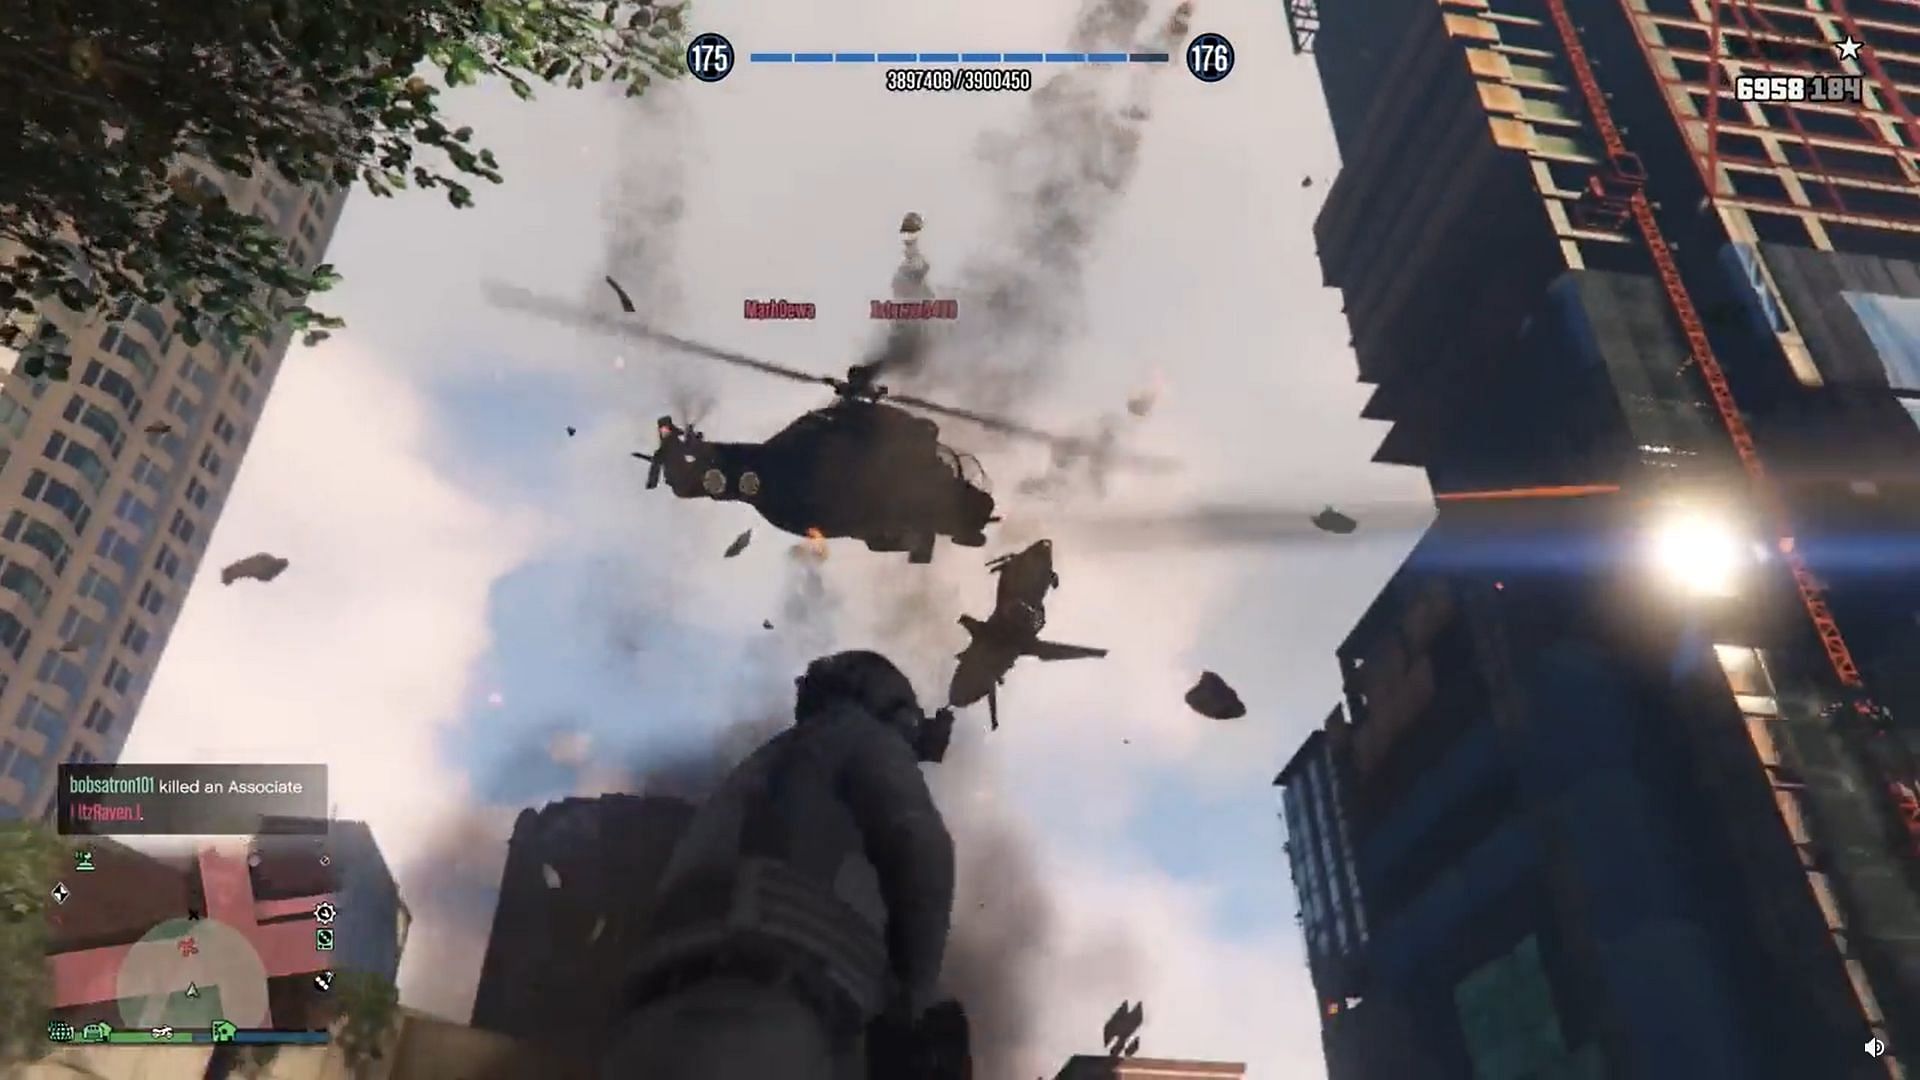 GTA Online players attacked with heavy artillery (Image via Reddit/u/hahayeahman000)